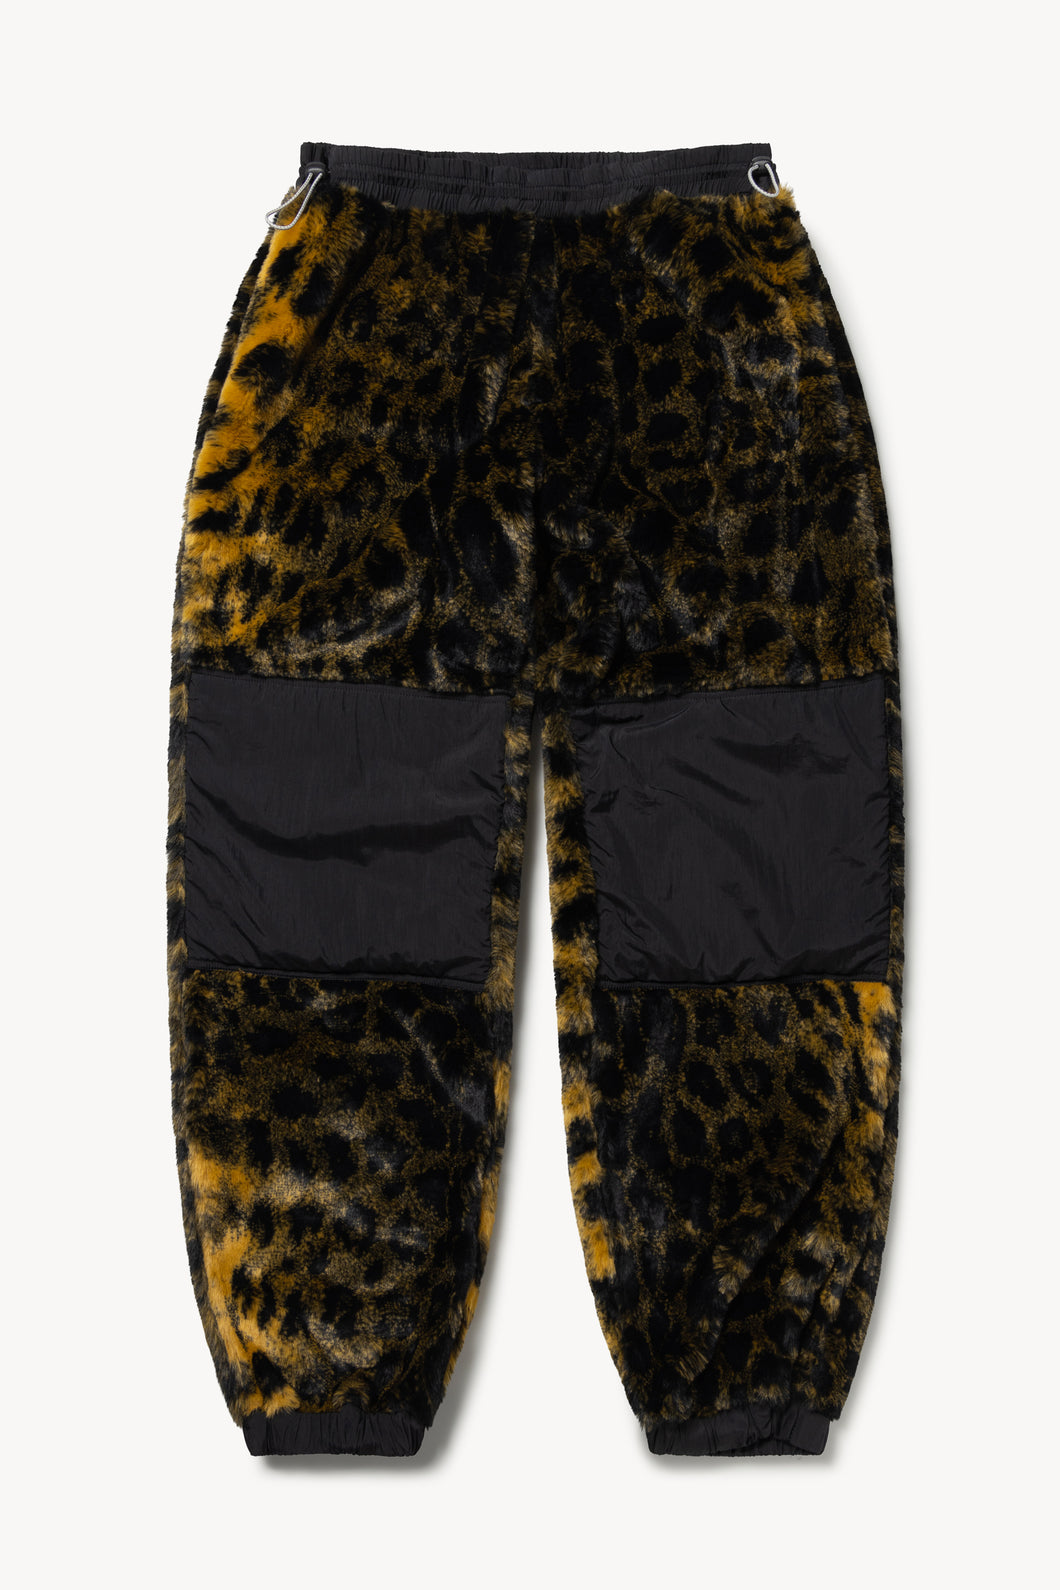 Leopard Furry Pants